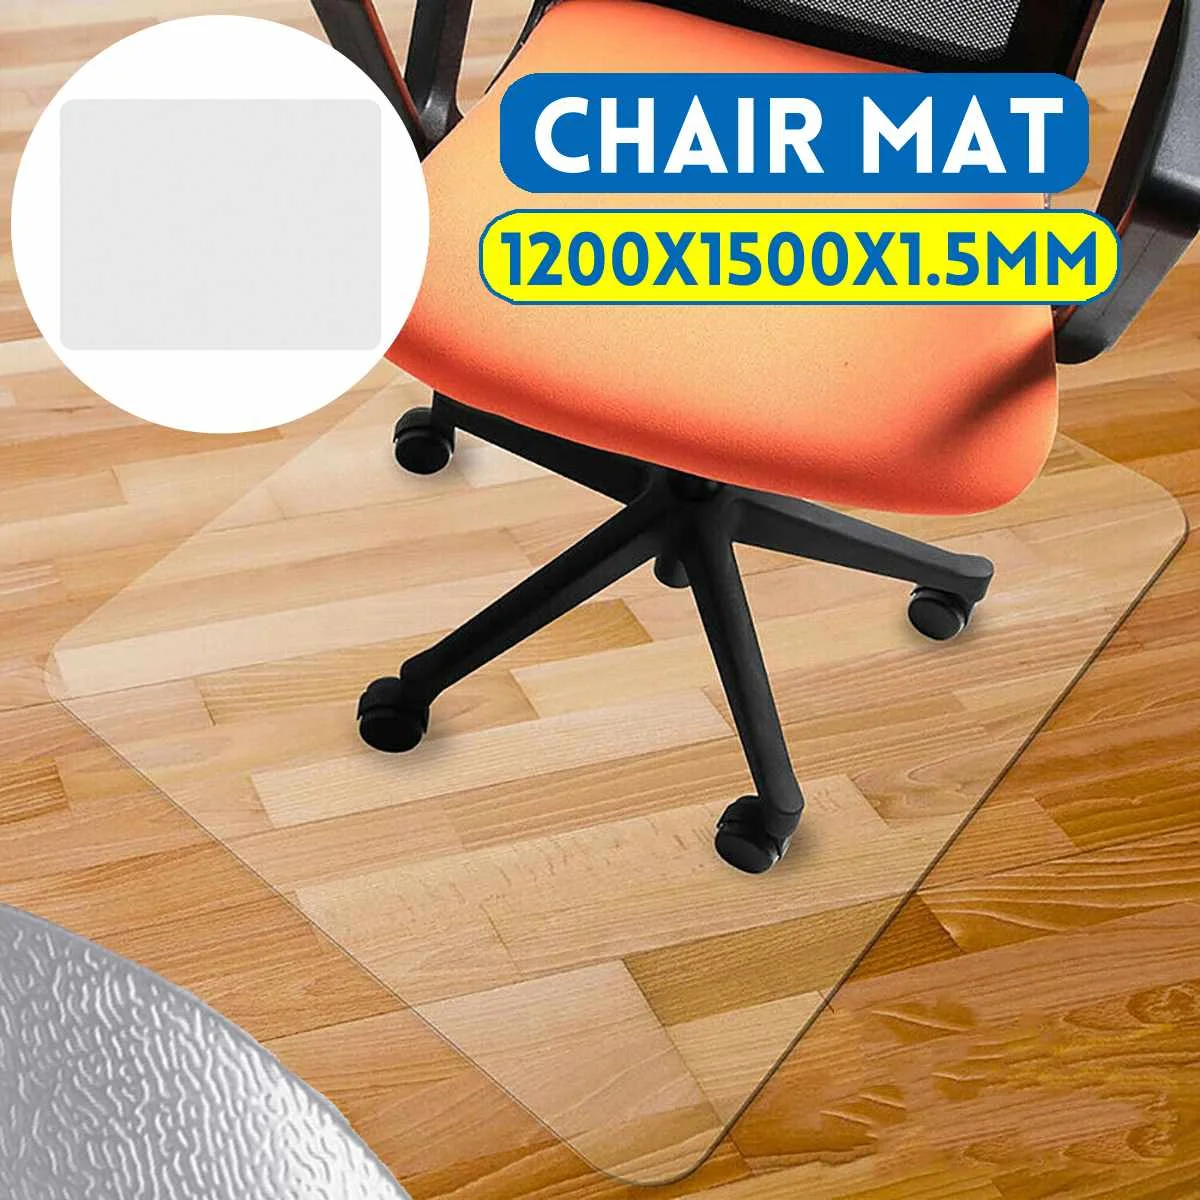 Carpet Home Office US Computer Desk Chair Mat For Hardwood Floor 